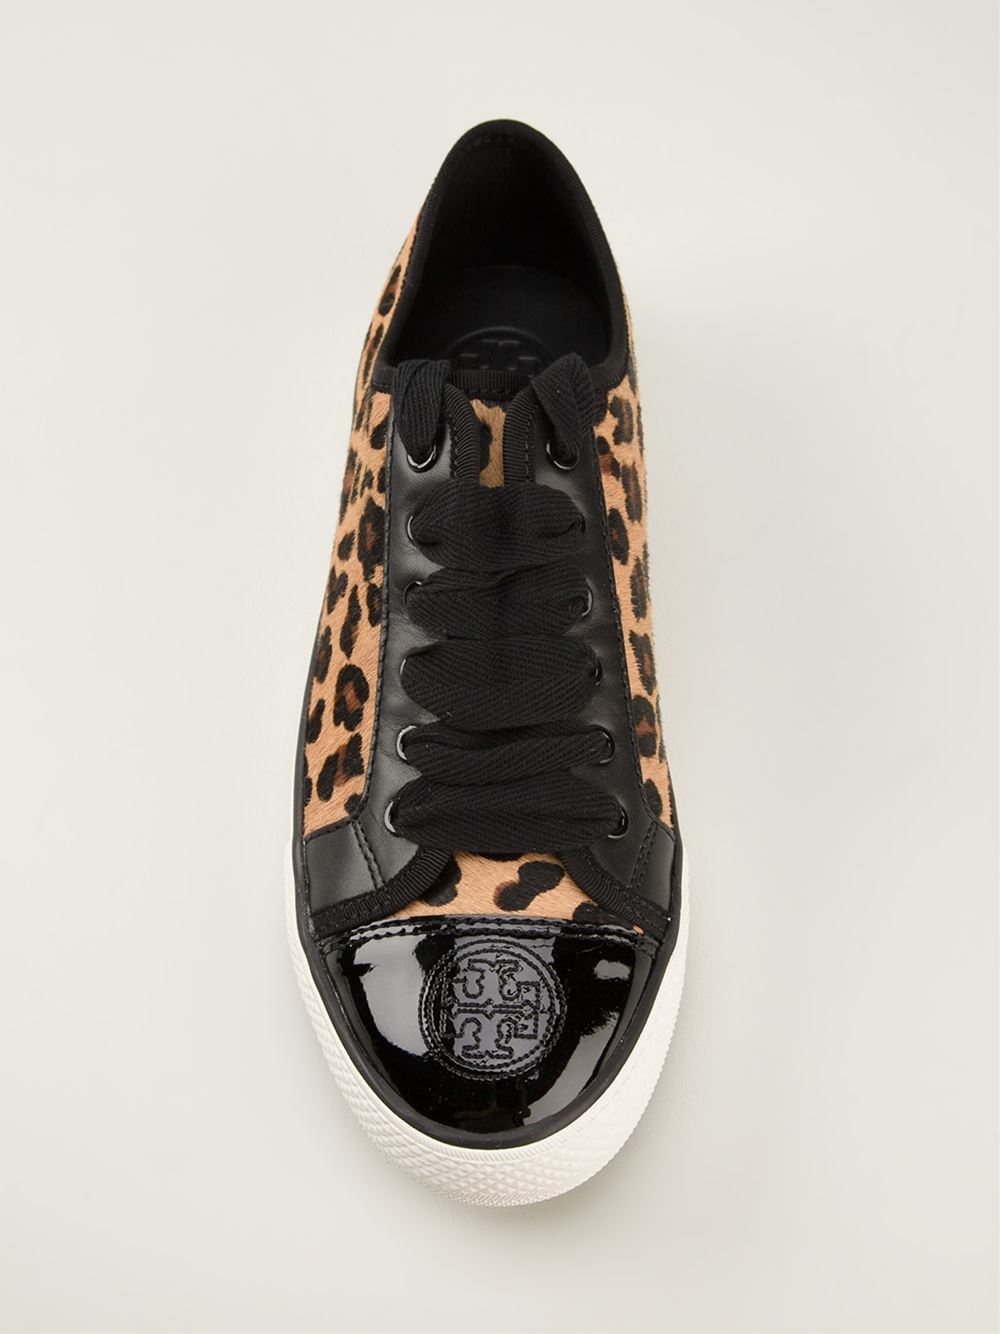 Tory Burch Leopard Print Sneakers in Black | Lyst